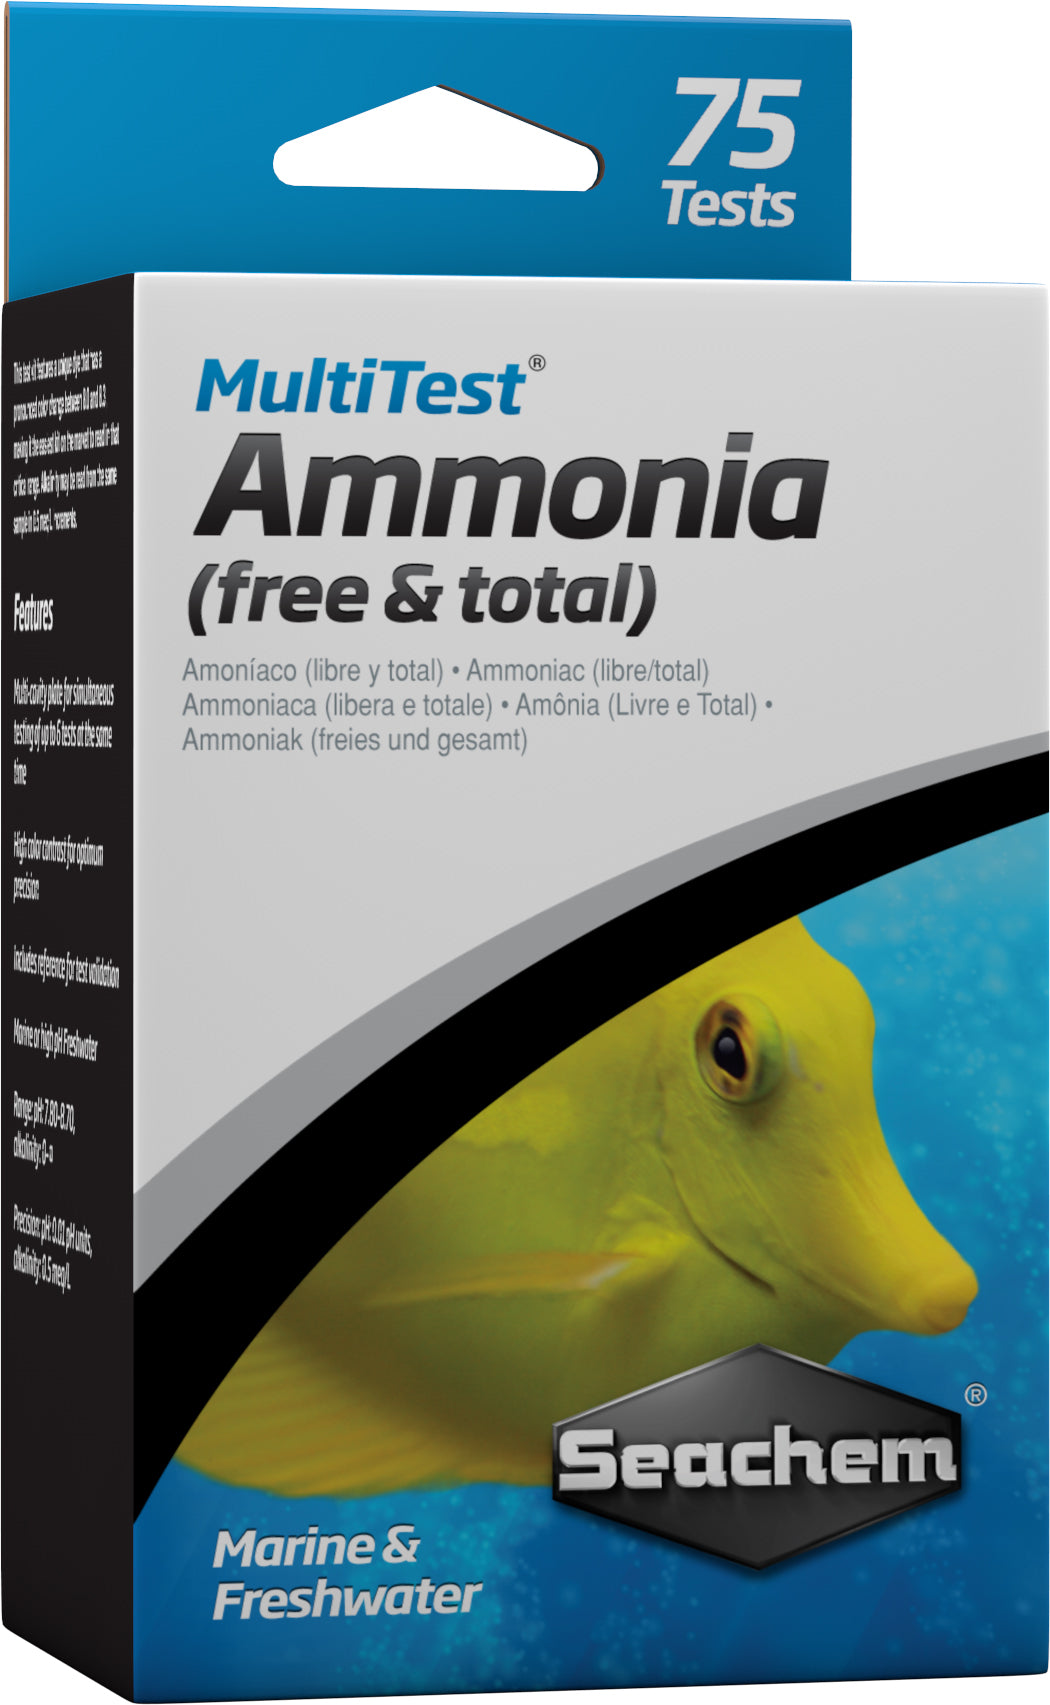 Vérificateur d'ammoniaque - Seachem Ammonia Alert